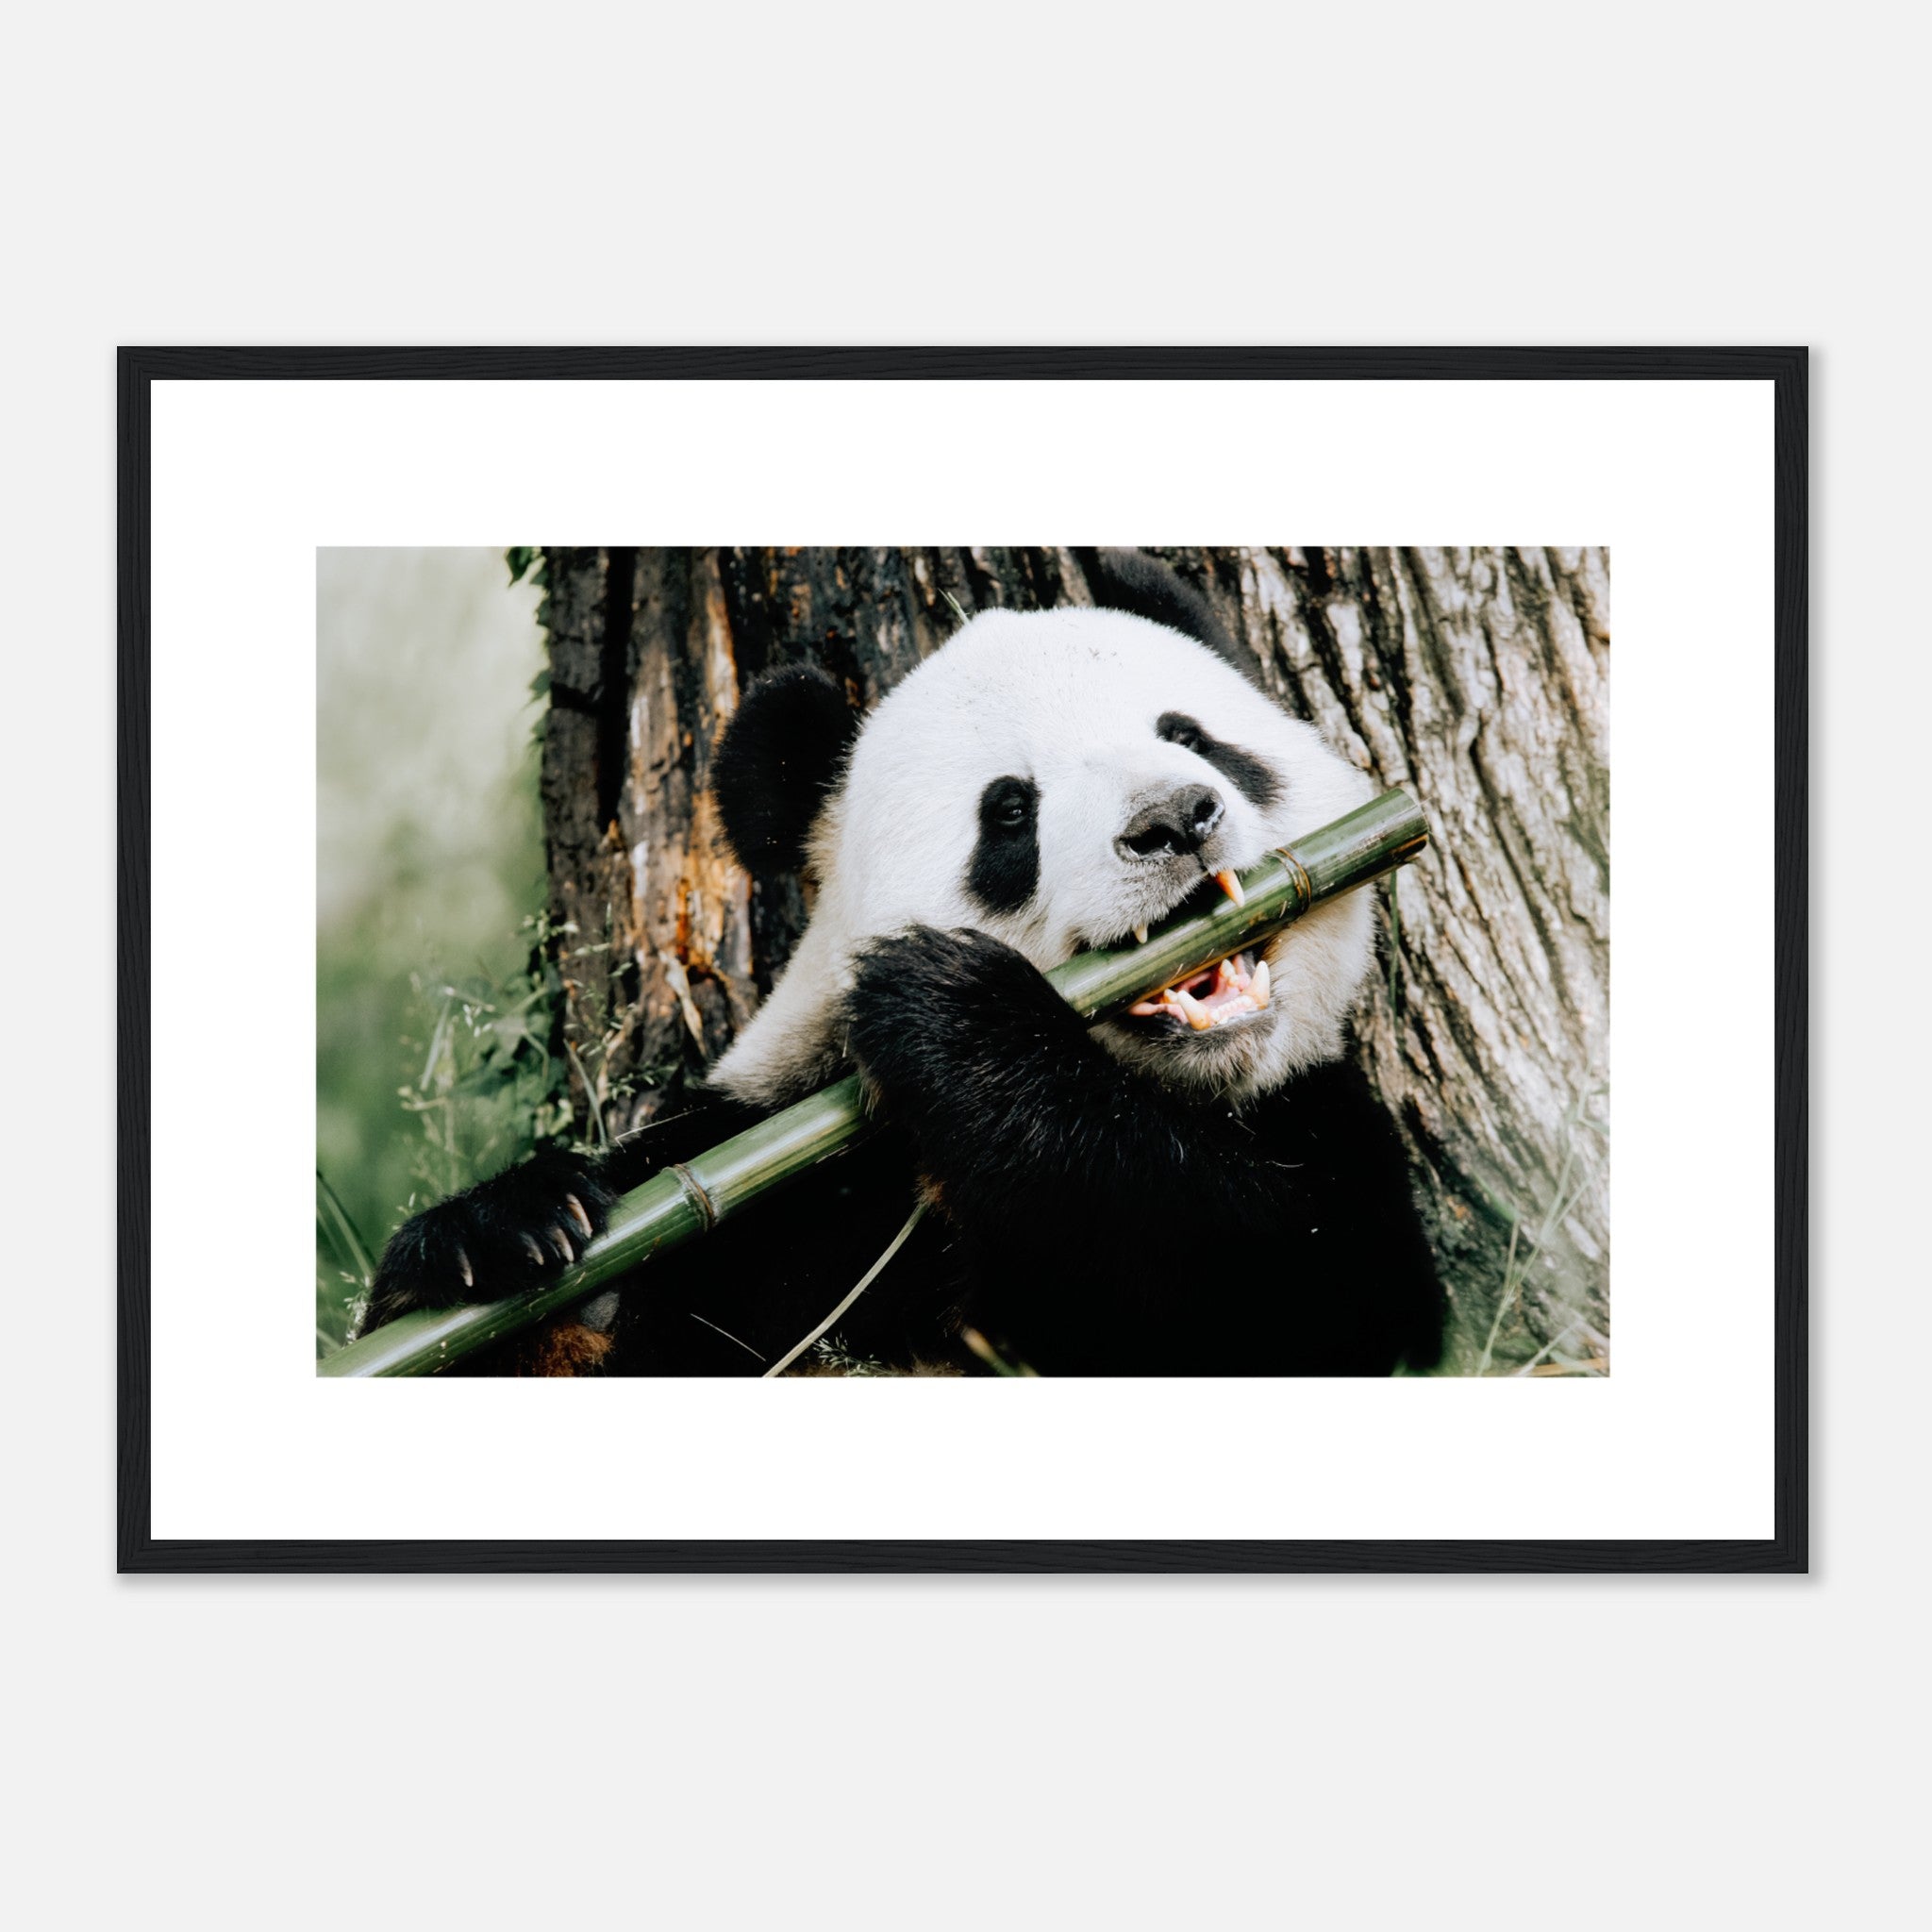 Panda Eating A Bamboo Stalk Poster